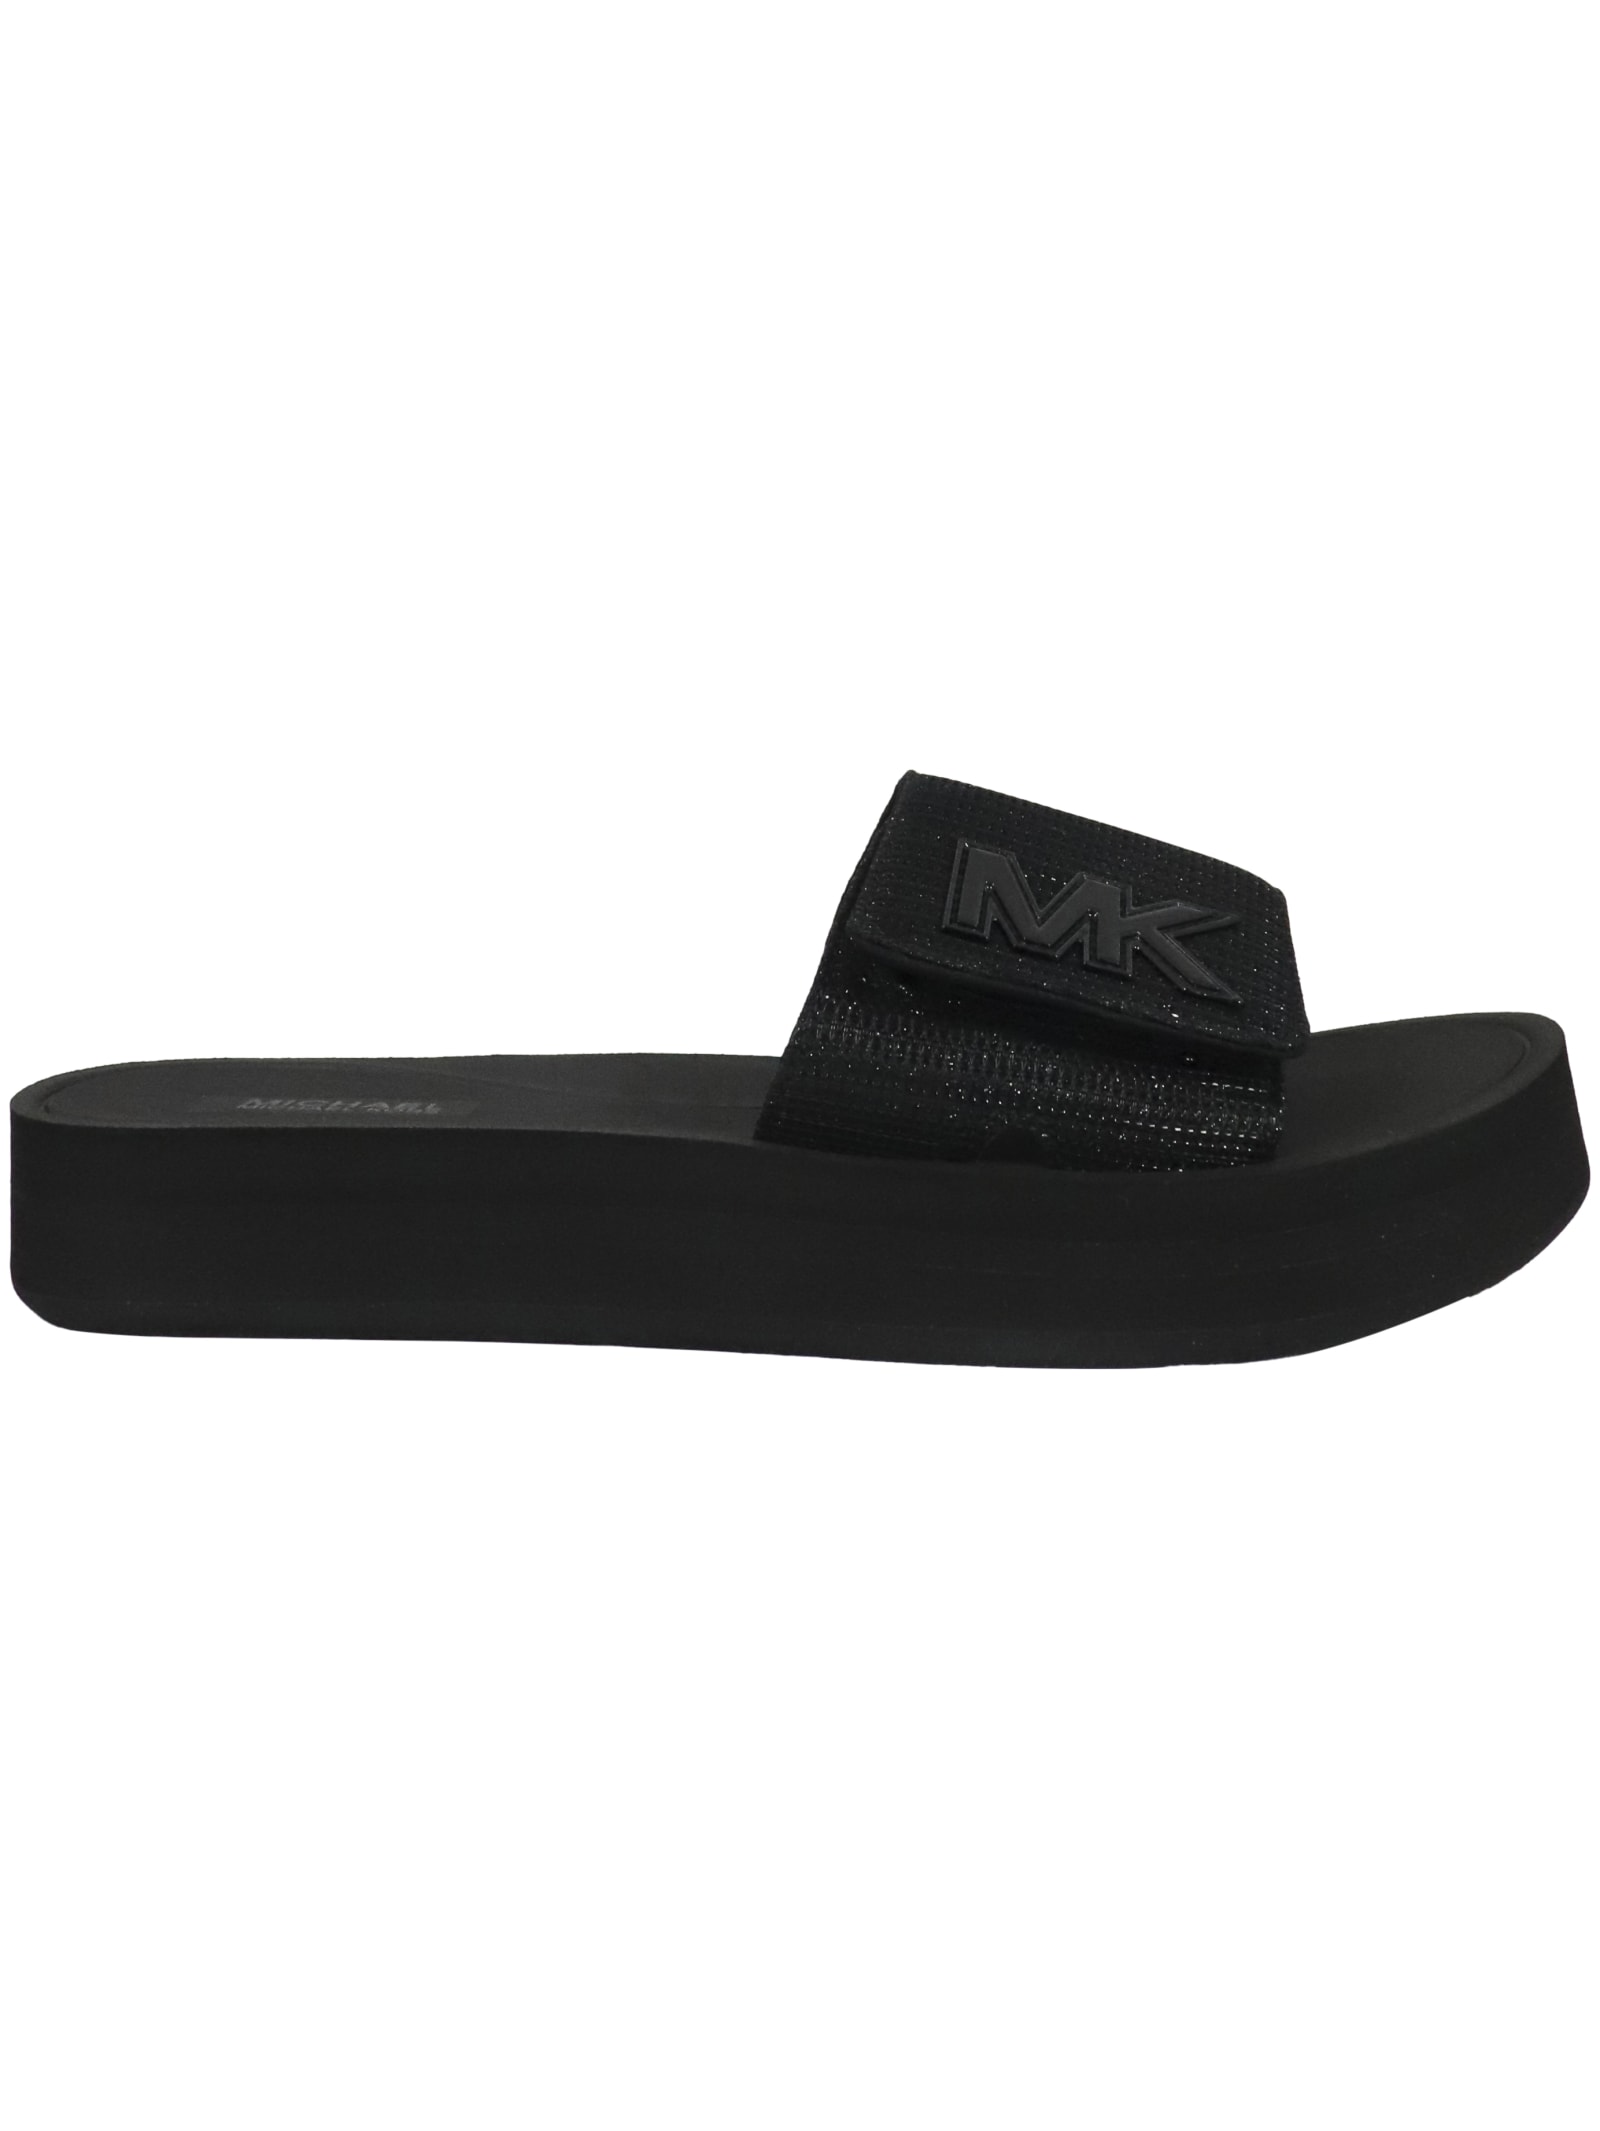 Buy Michael Kors Platform Slide Flat Shoes online, shop Michael Kors shoes with free shipping